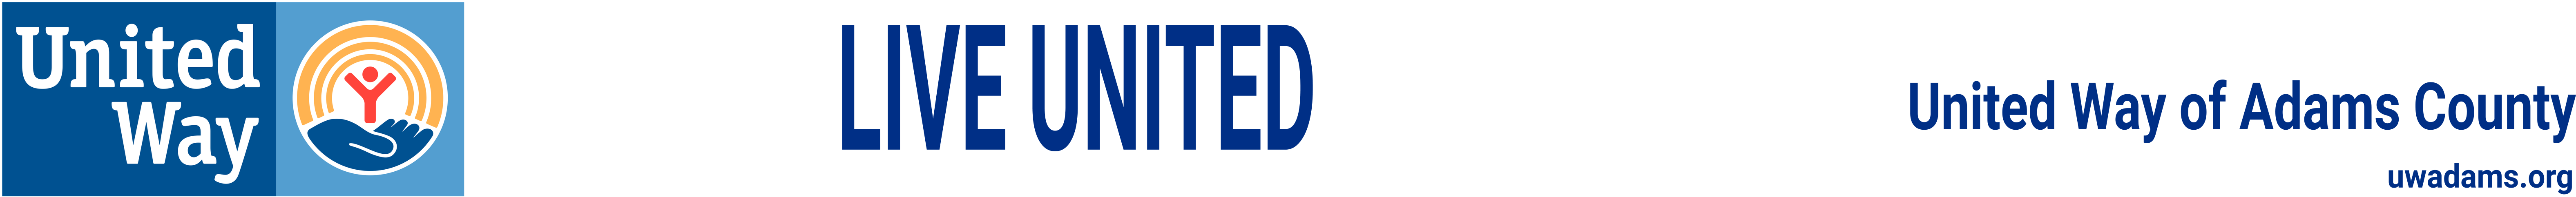 United Way of Adams County Logo